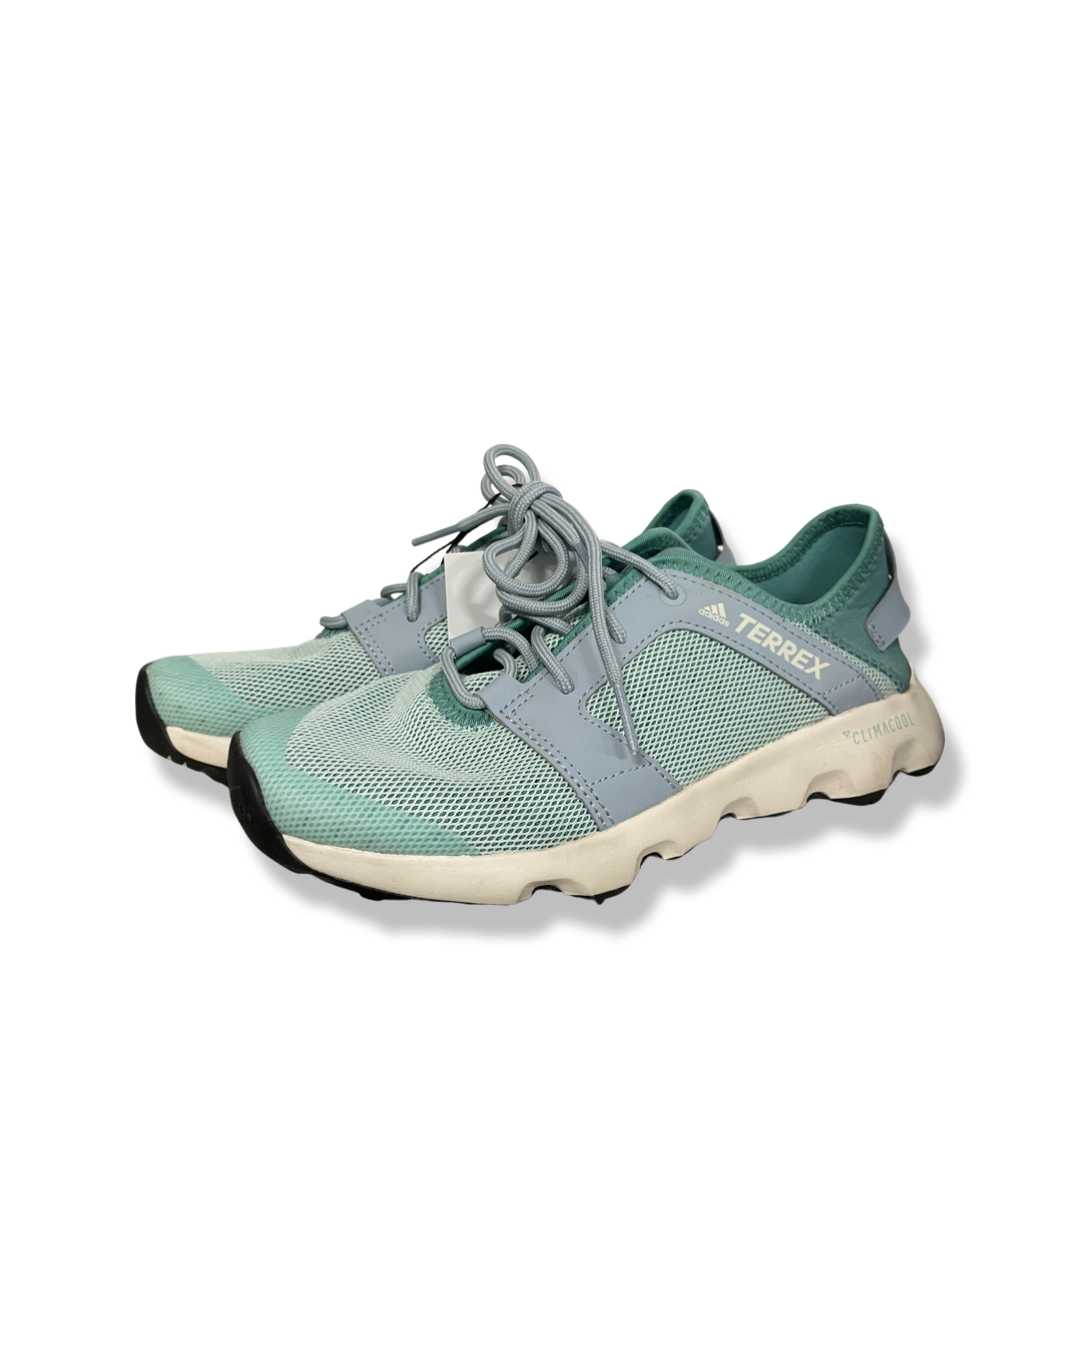 Blue Adidas Hiking Boots, Women's 6.5